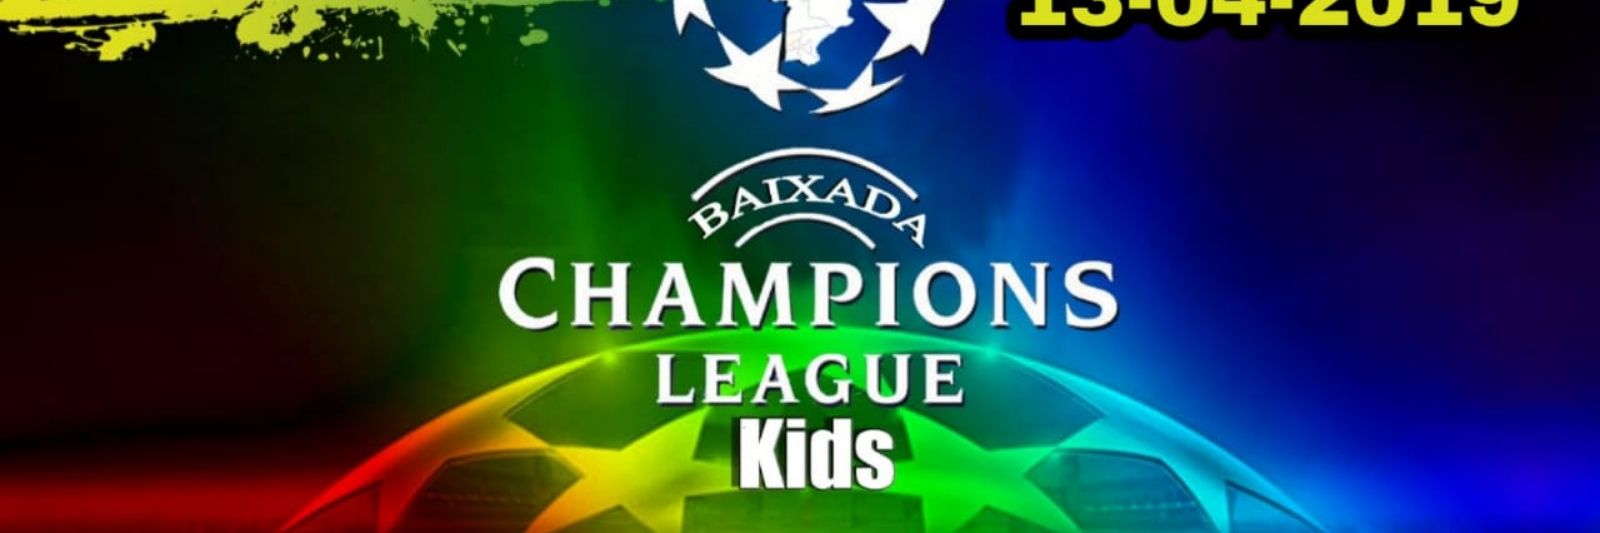 I BAIXADA CHAMPIONS LEAGUE - KIDS